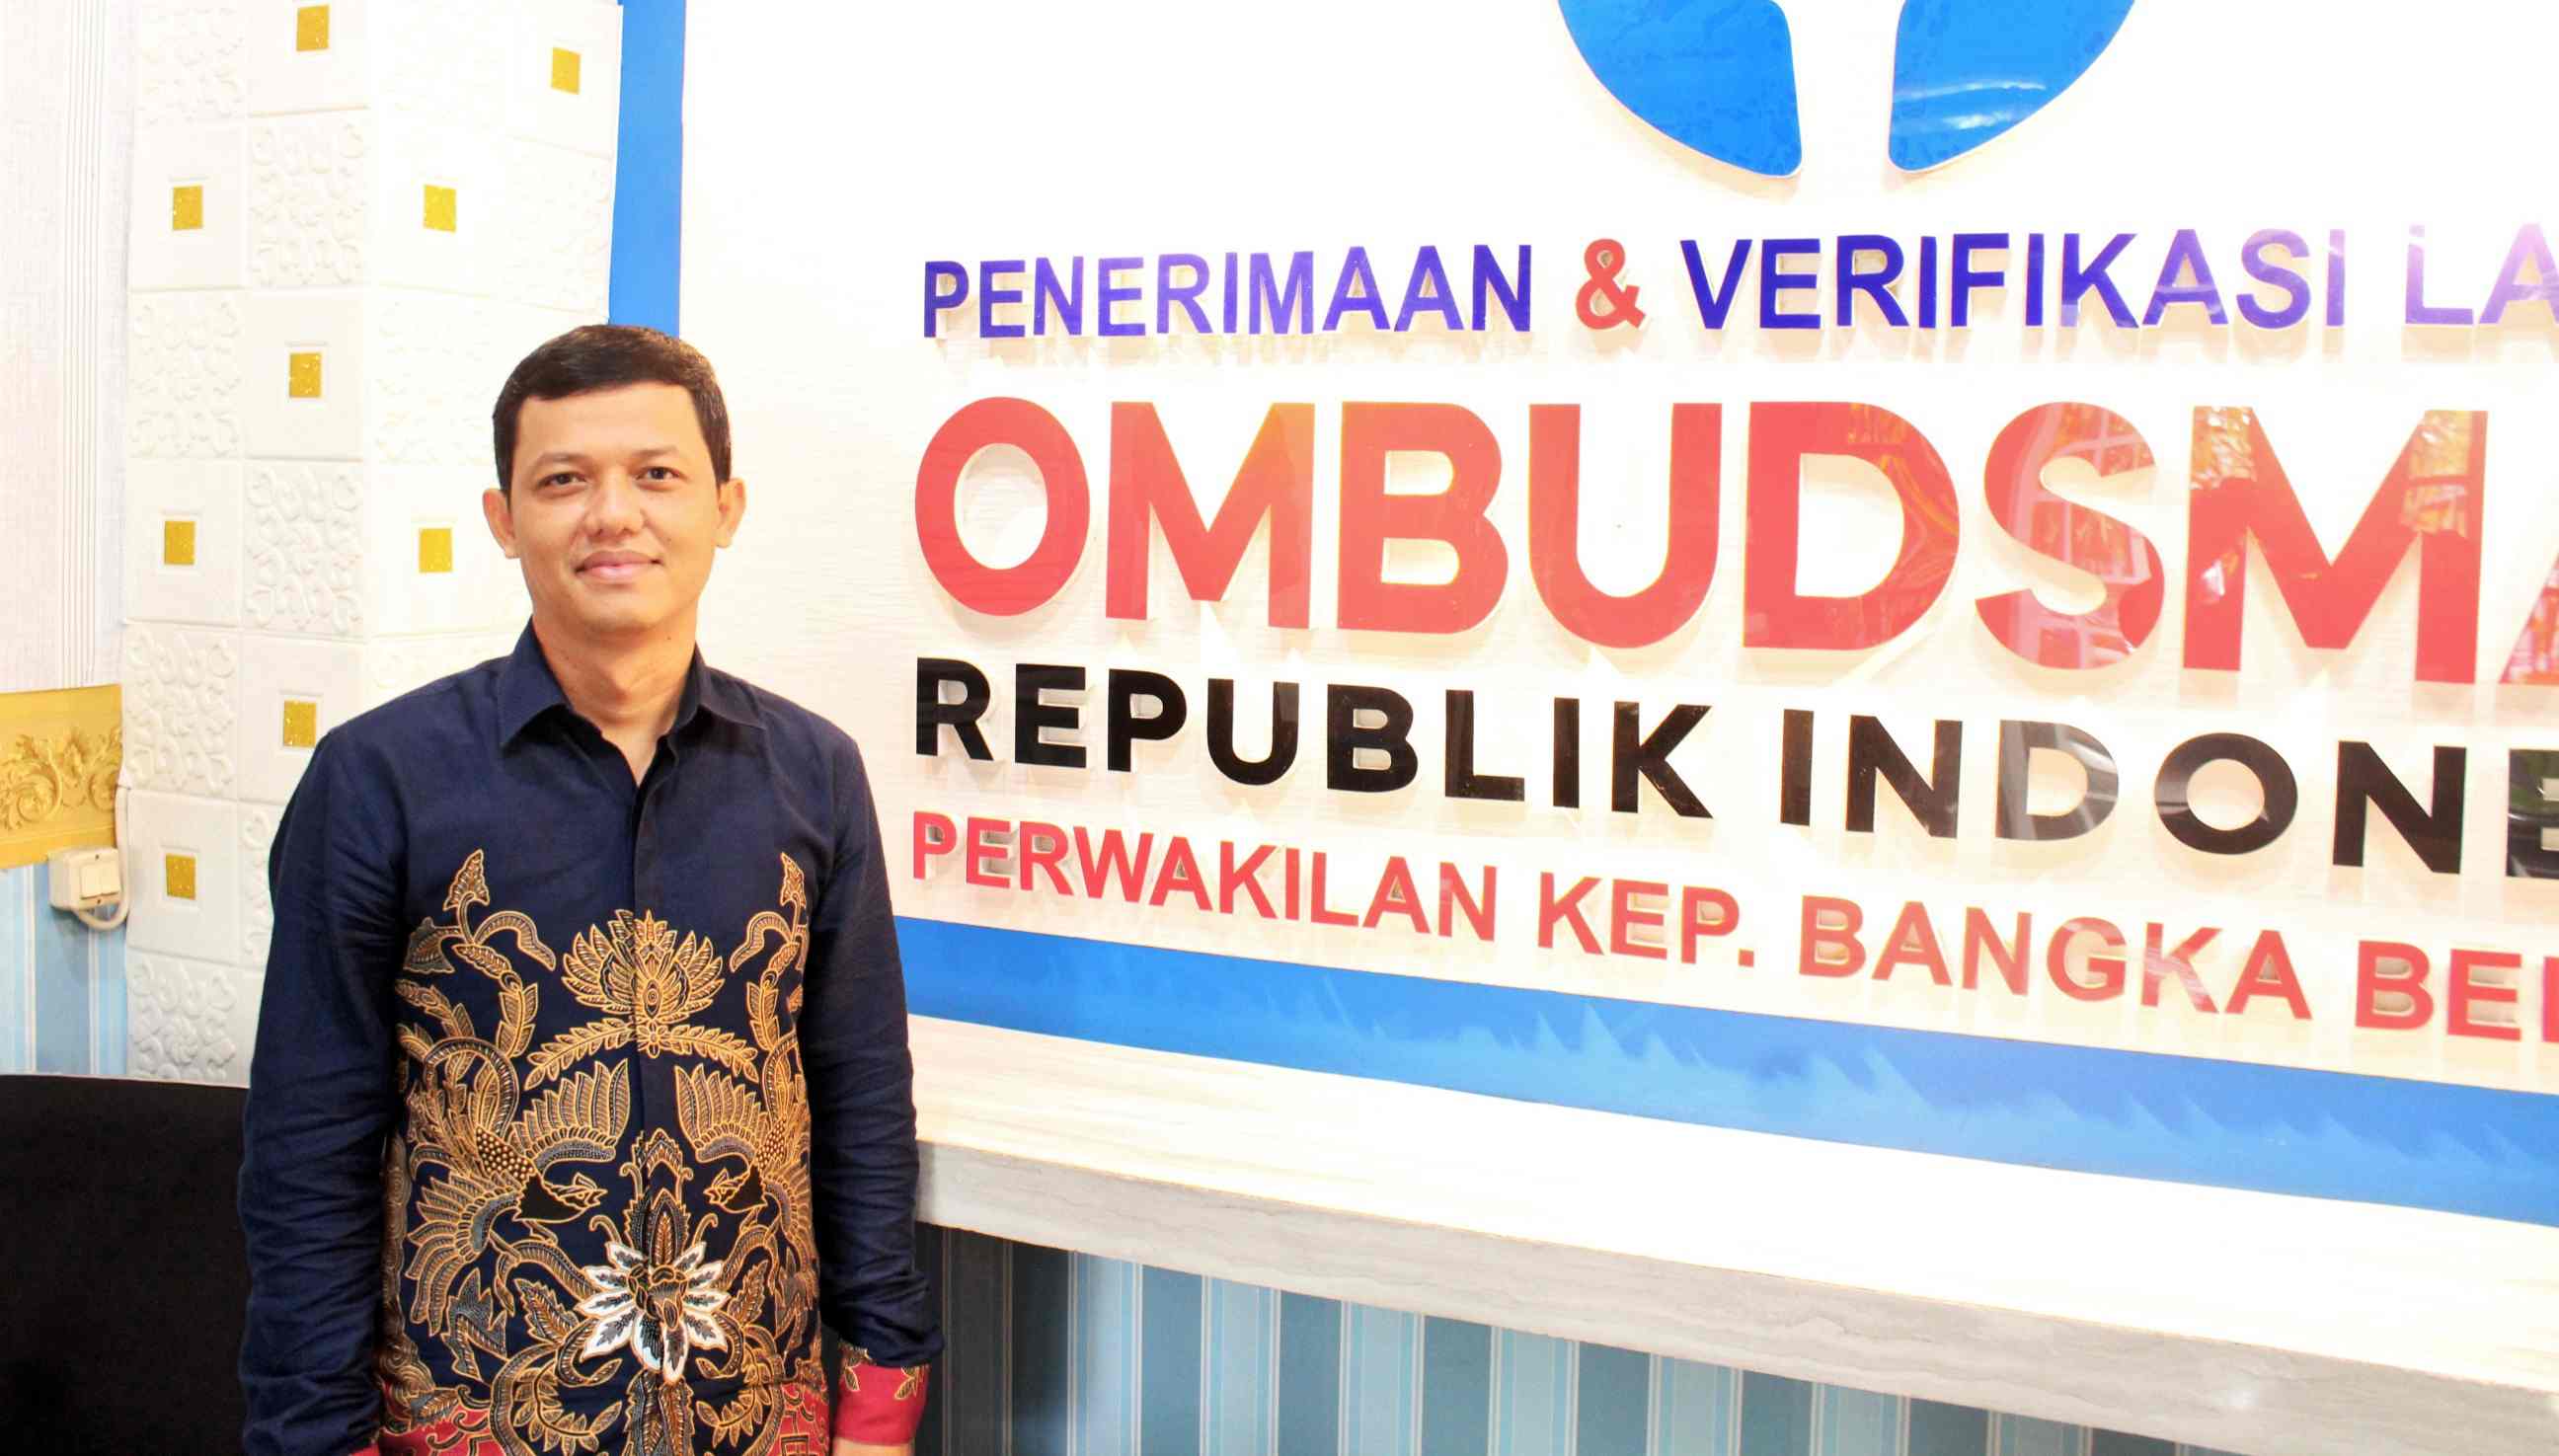 Ombudsman Babel Bahas Pelaksanaan Perlakuan Saran bersama Pemkab Bangka